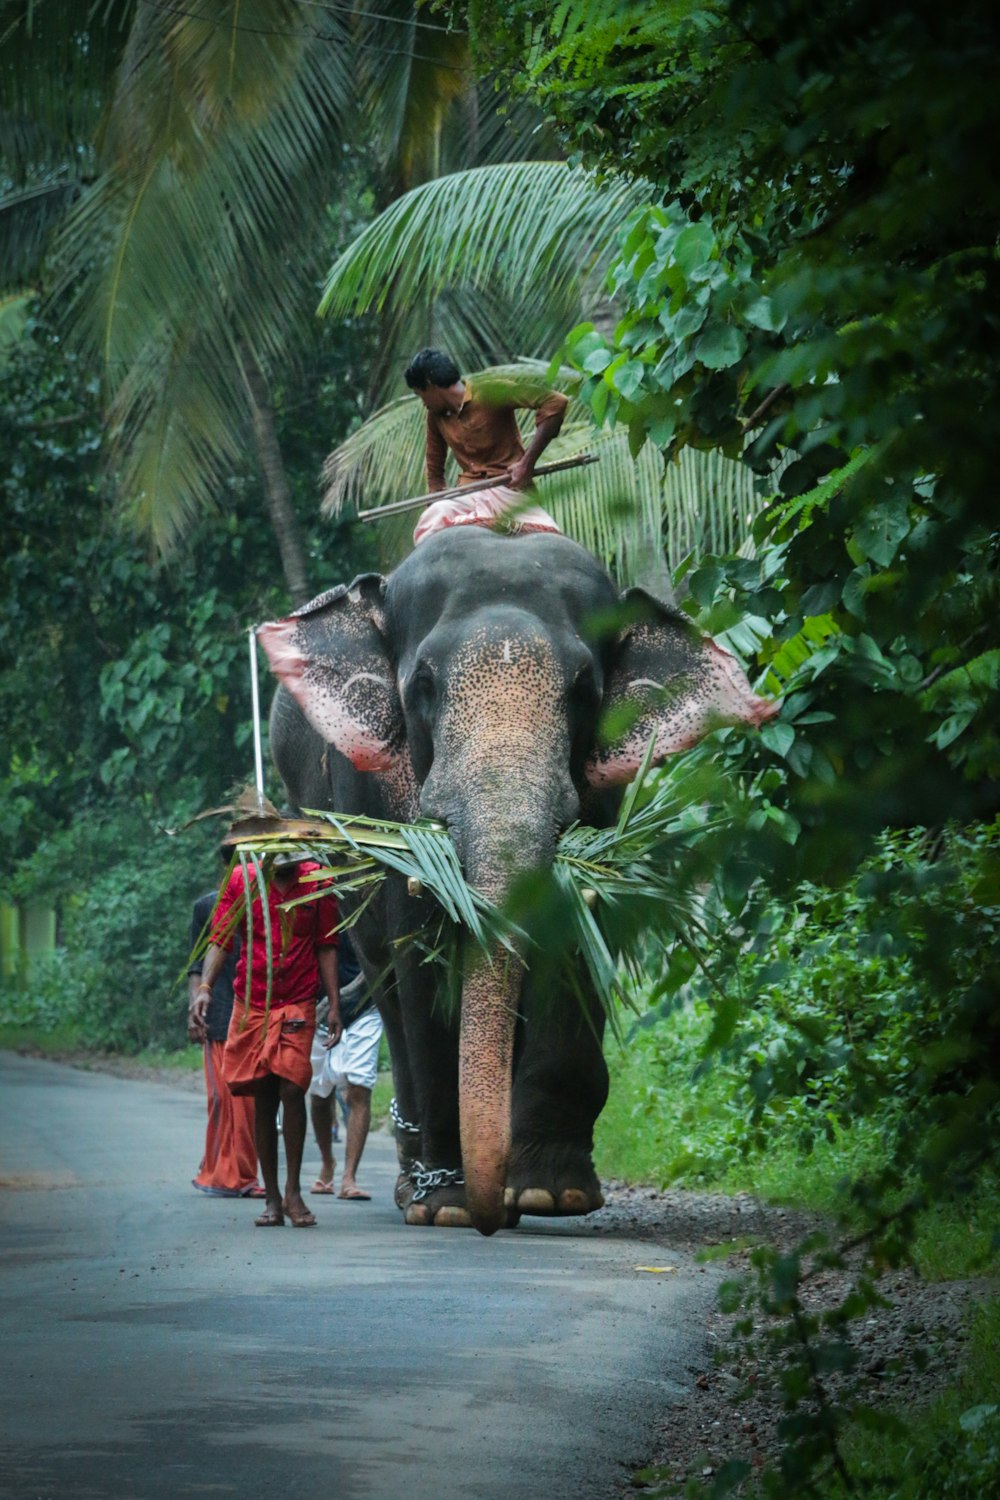 man riding elephant on road